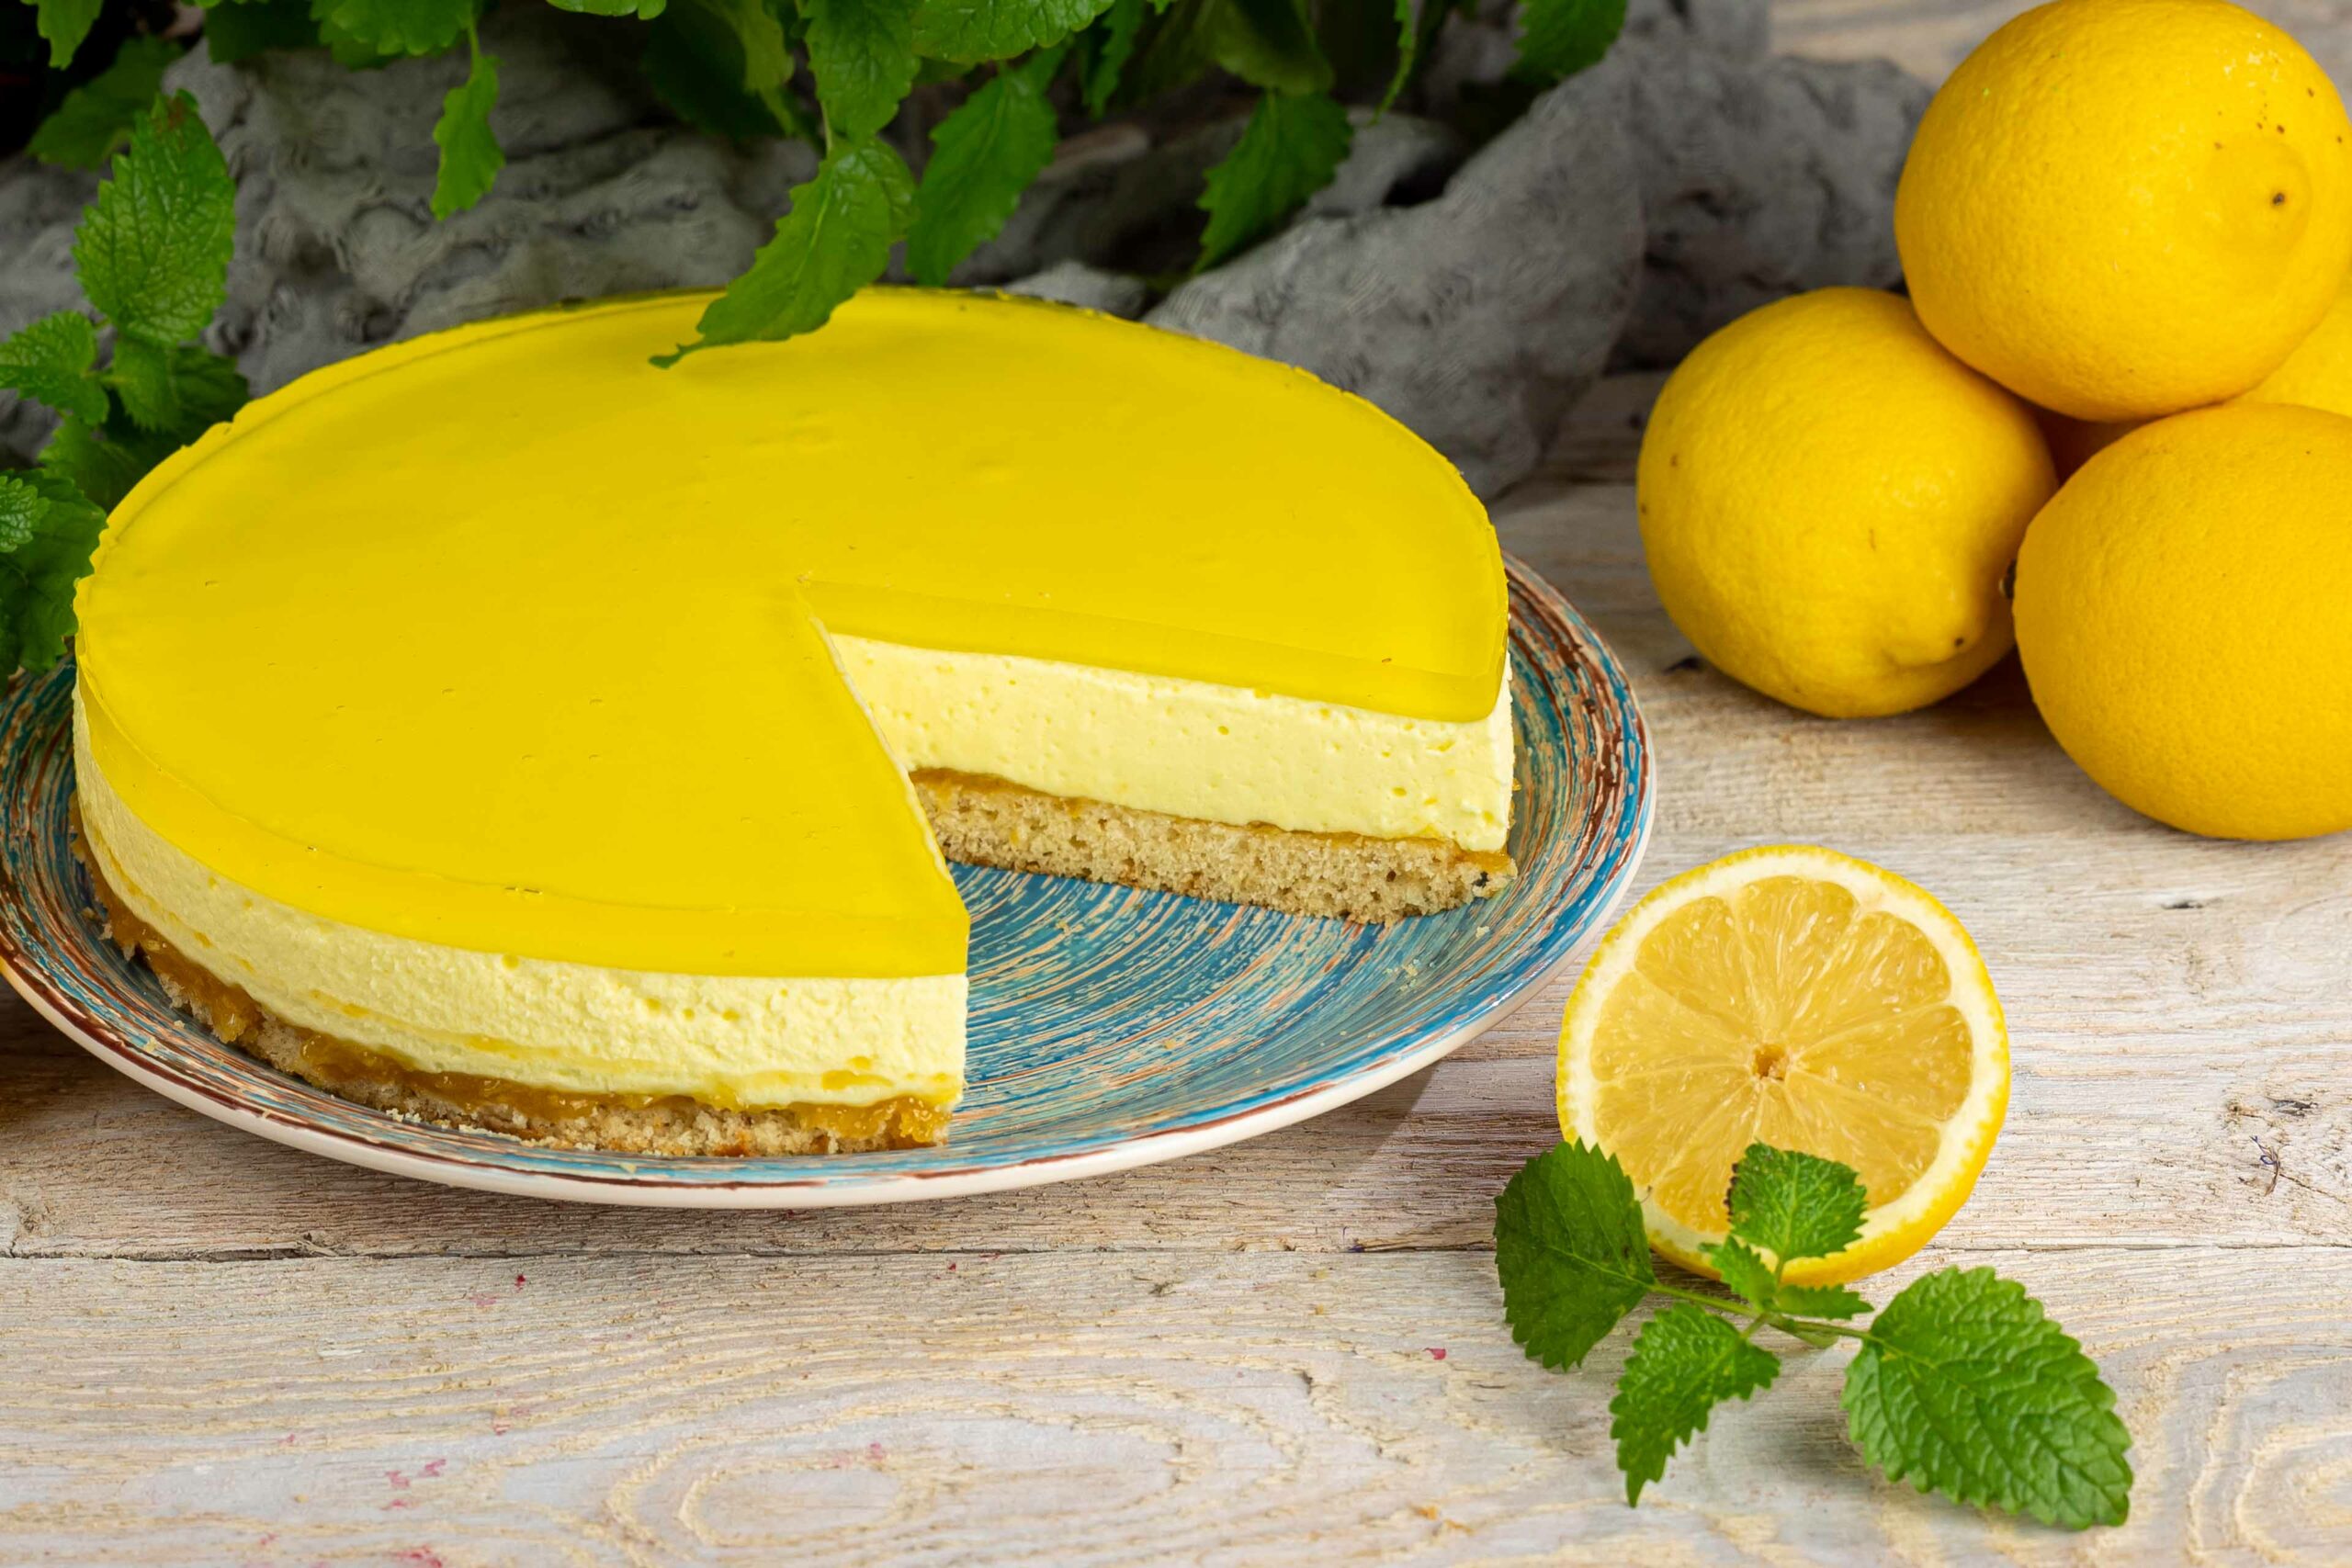 Torta al limone 1600 4k (7)